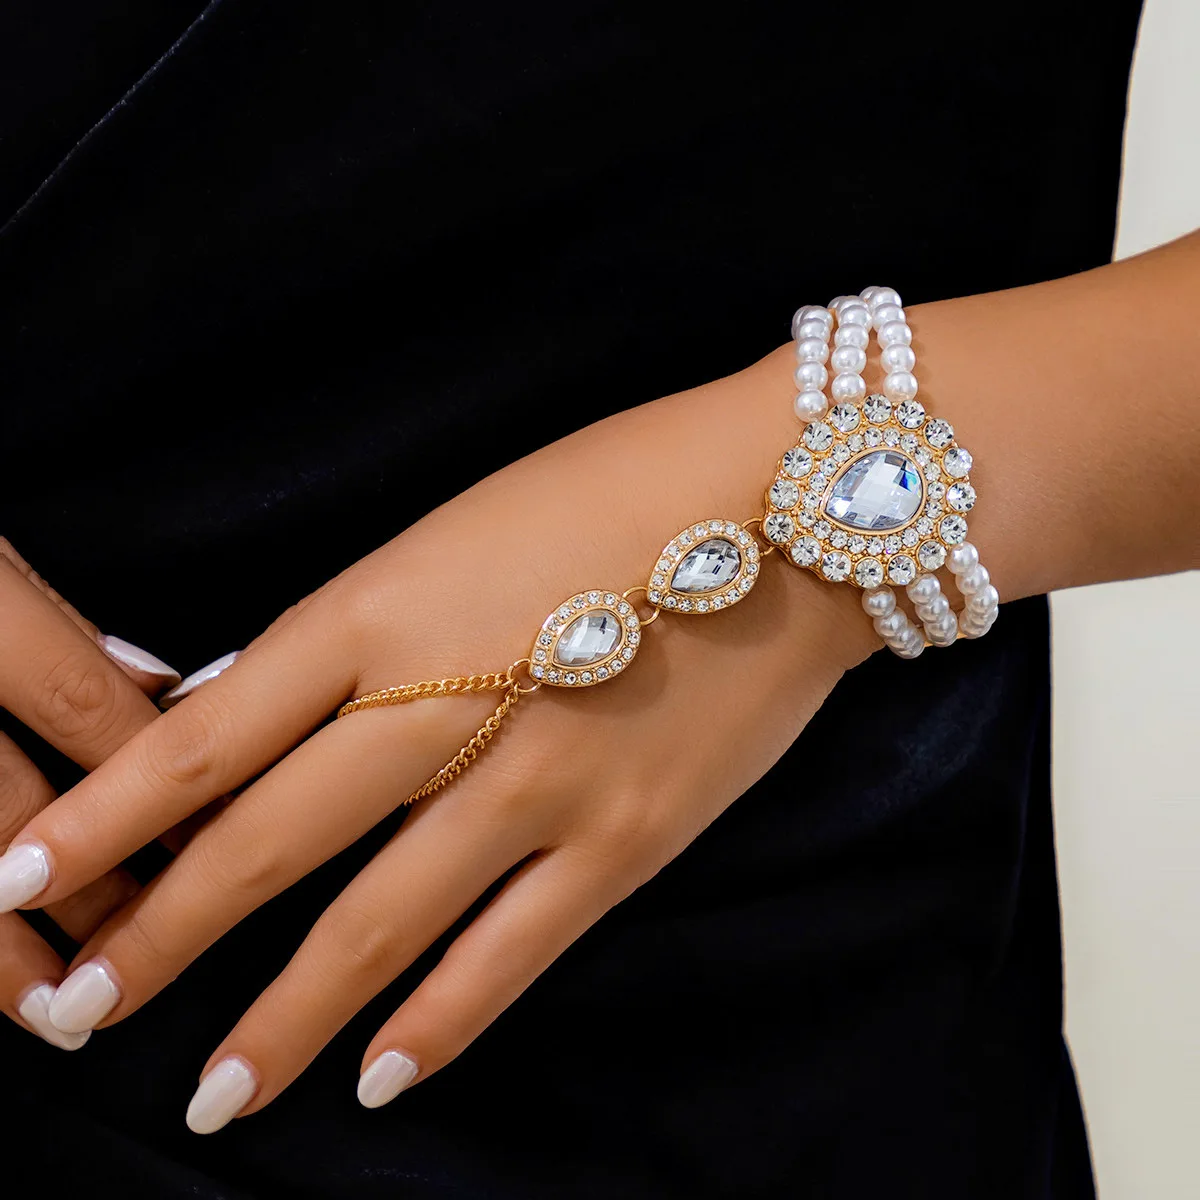 

Ailodo Elegant Imitation Pearl Chain Big Crystal Bracelet For Women Luxury Party Wedding Charm Bracelet Fashion Jewelry Gift